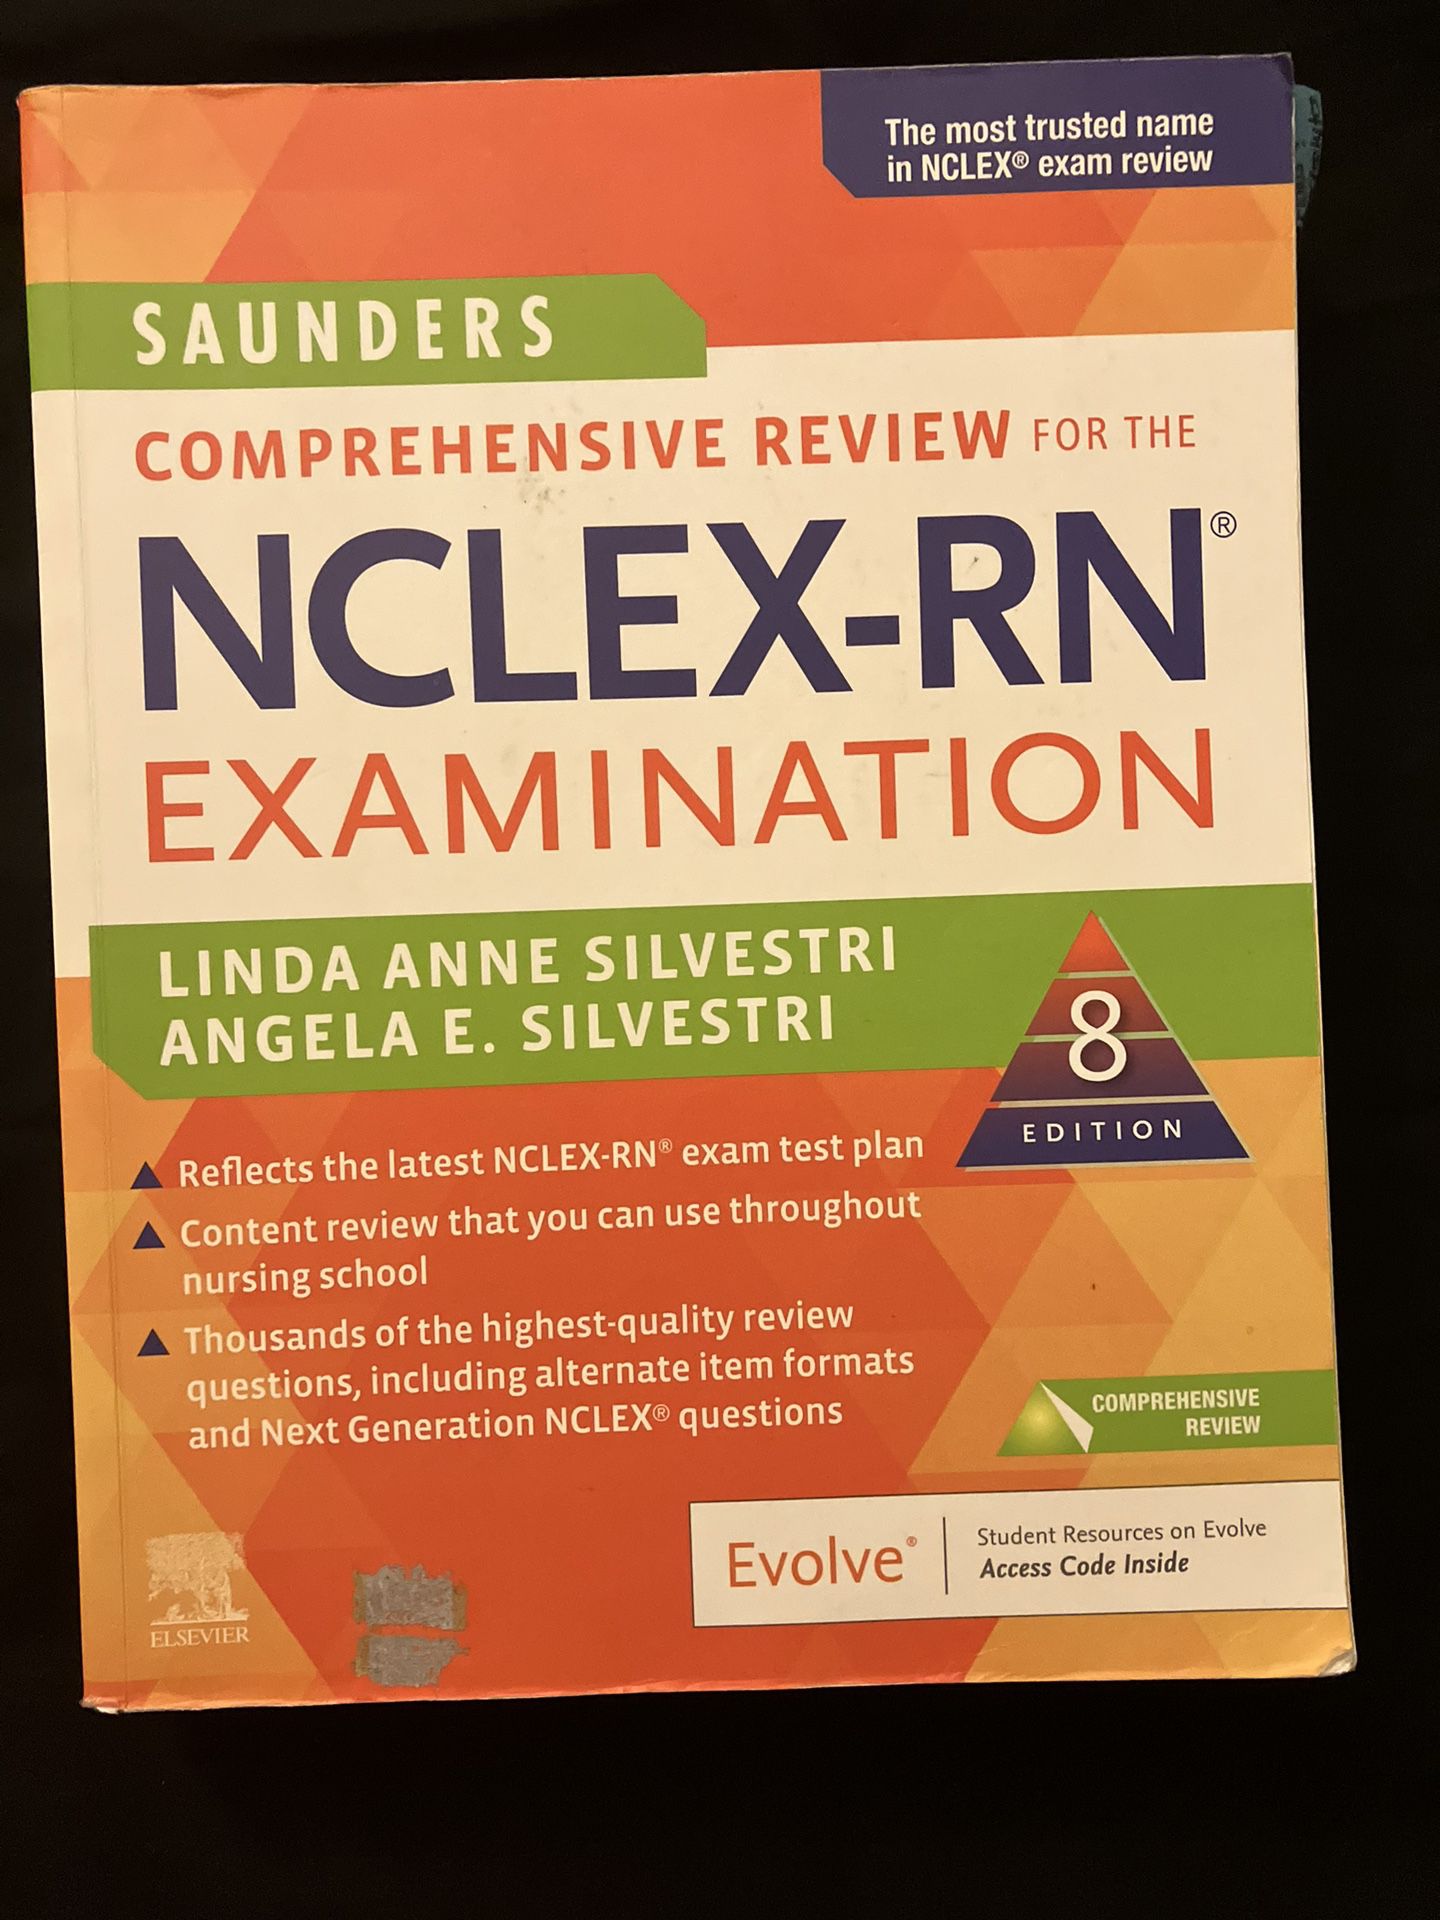 NCLEX-RN* EXAMINATION